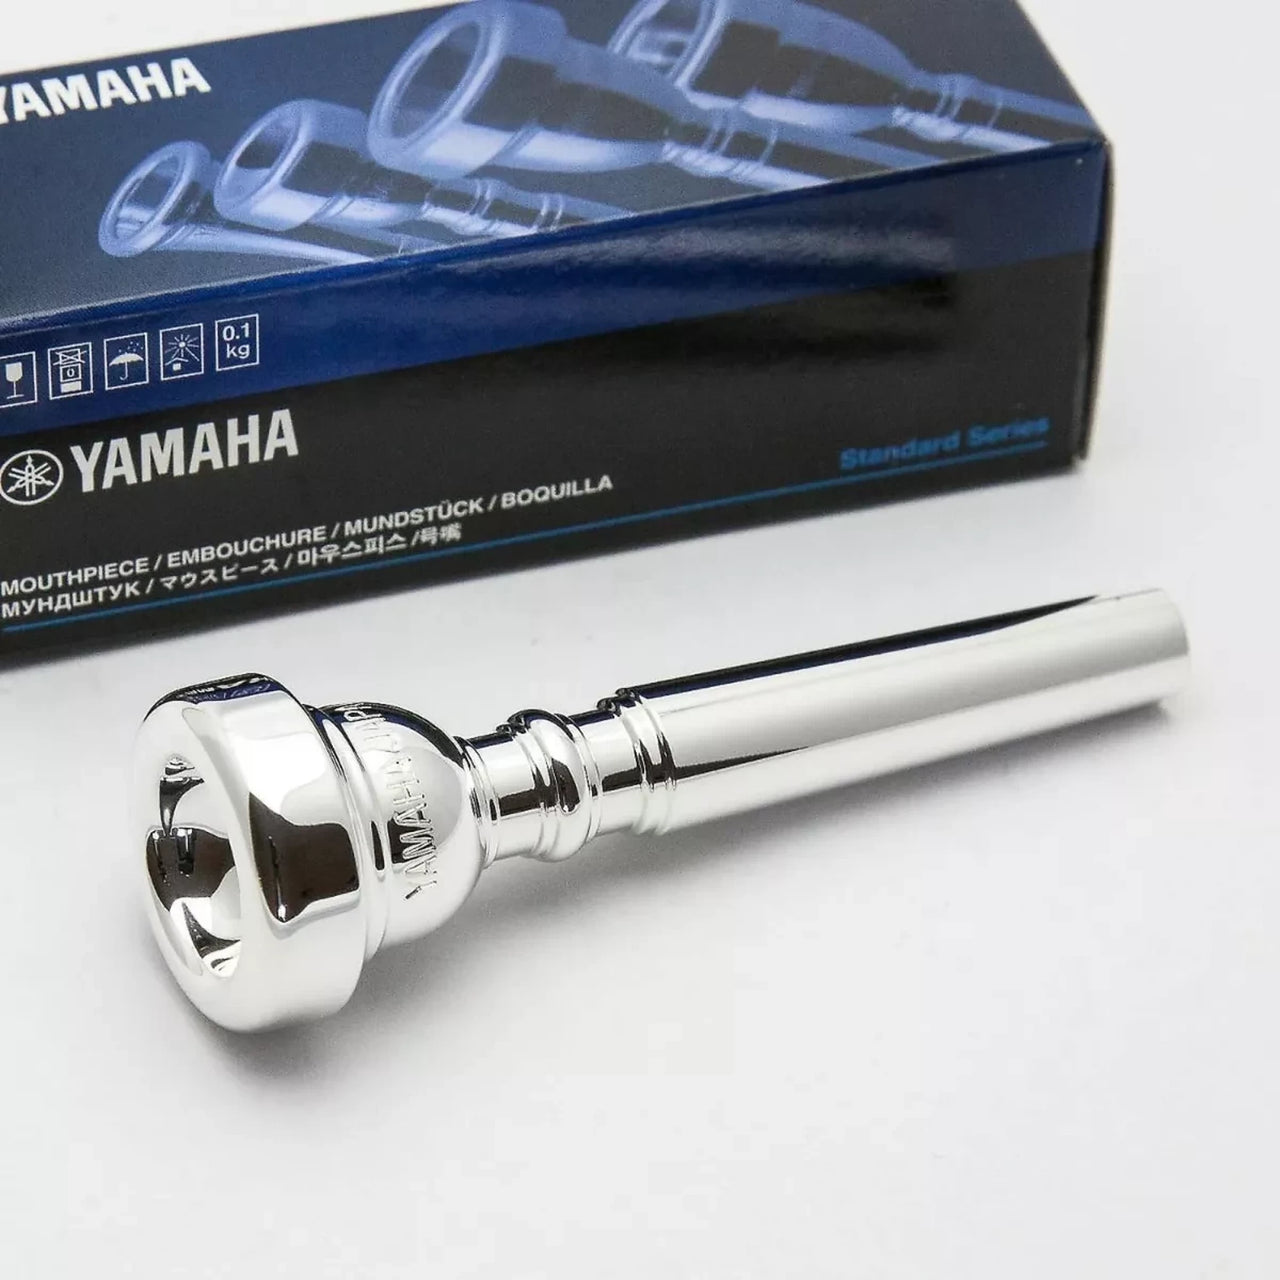 Boquilla Yamaha Para Trompeta, Tr13a4a